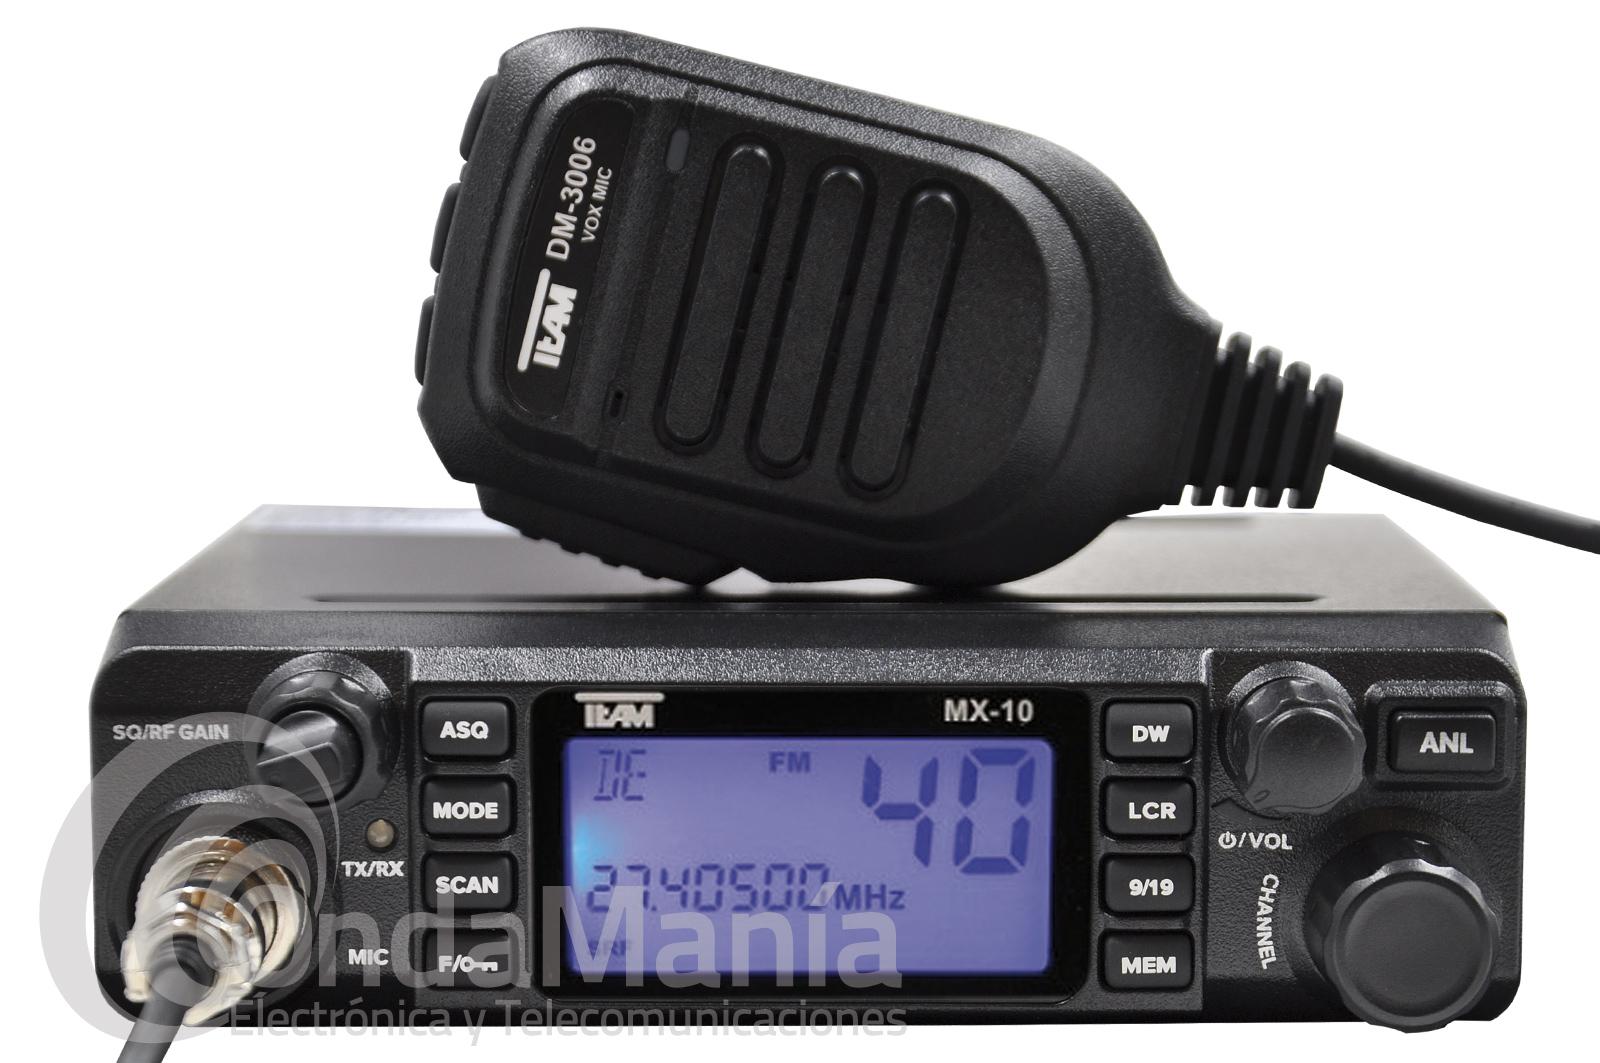 Radio Cb Alan-48 Pro Am/Fm/Asq 12/24V - Alan